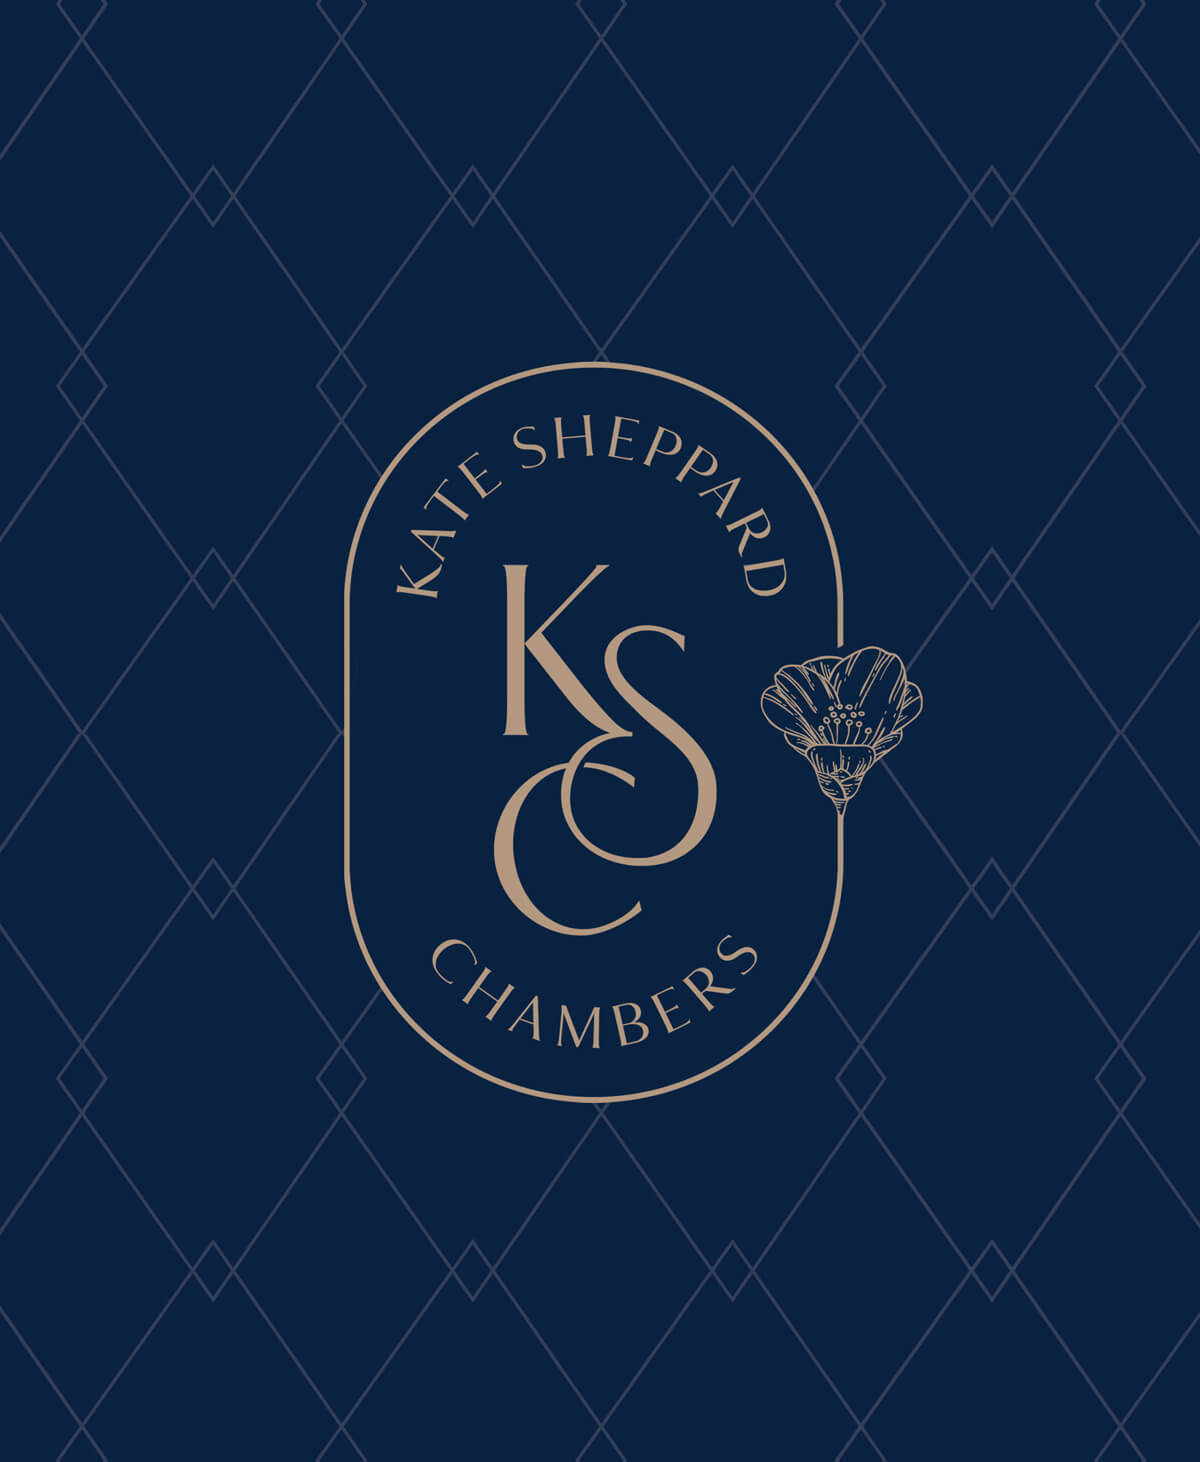 Kate Sheppard Chambers secondary logo design